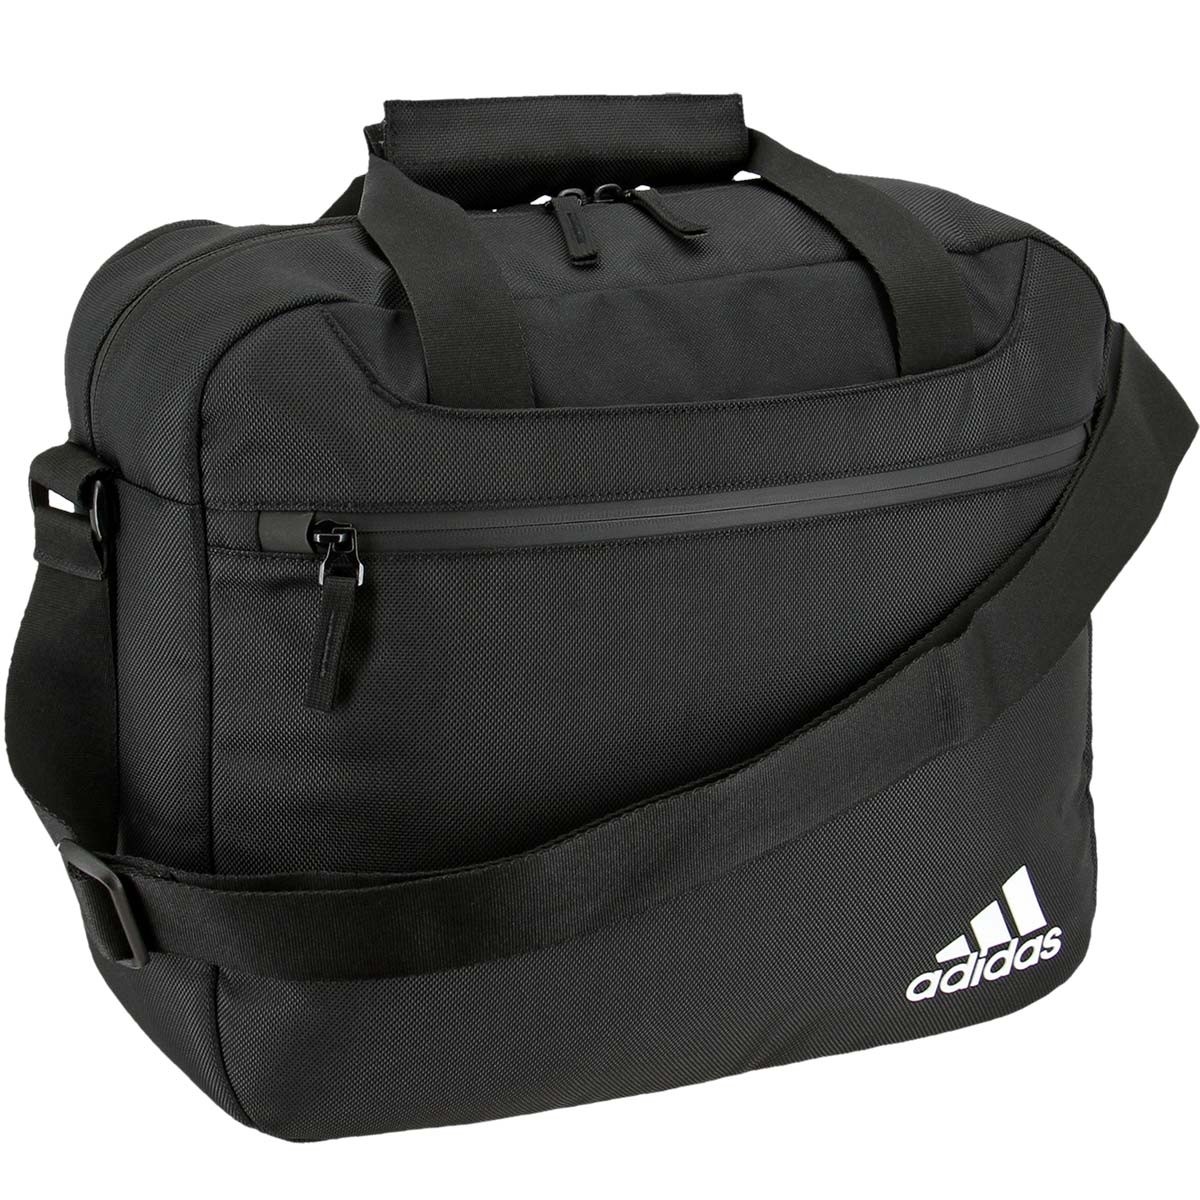 Adidas Coach's Stadium Messenger Bag 